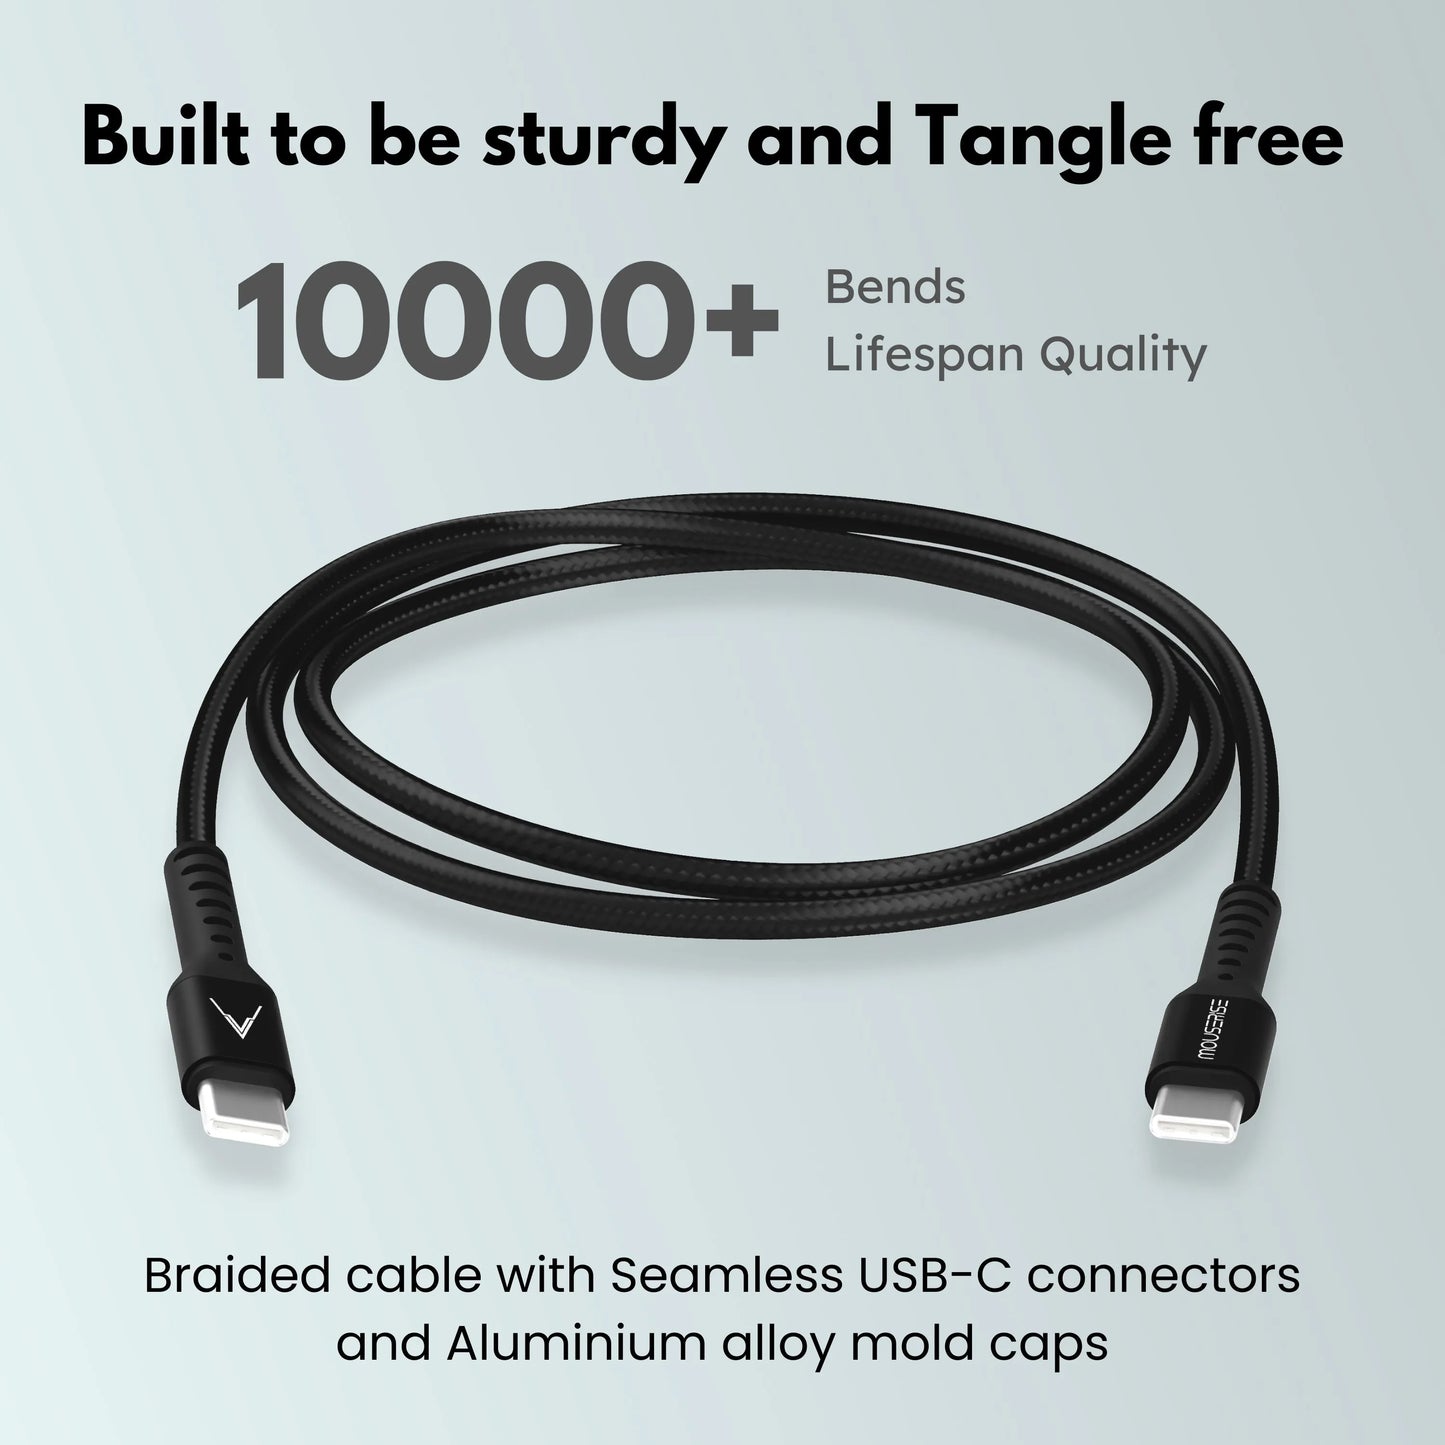 Velocity 60W USB-C to USB-C Cable